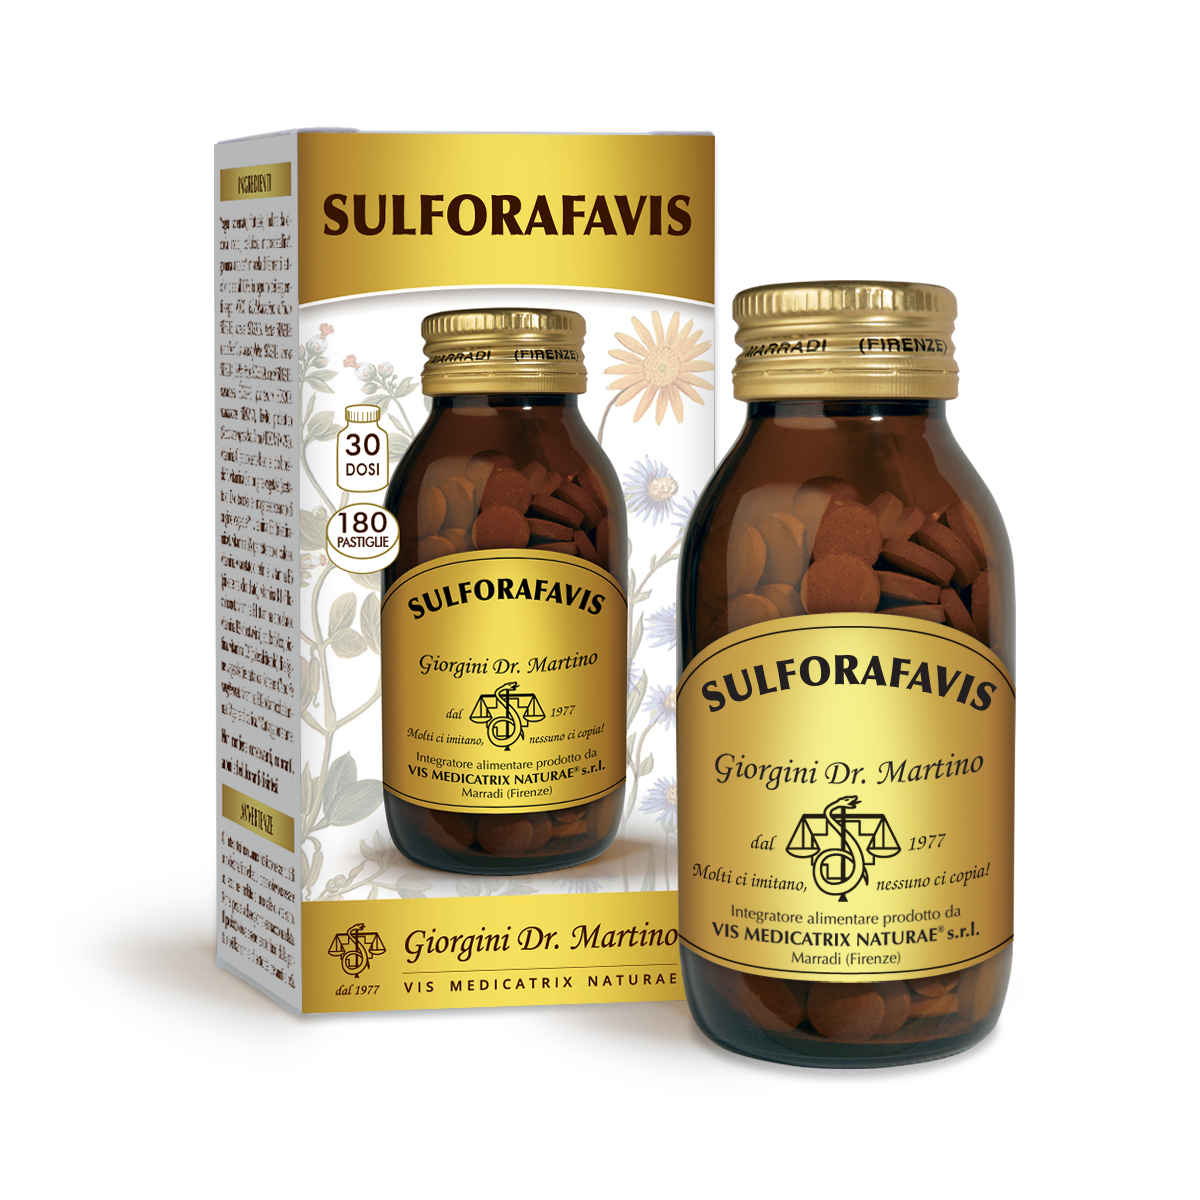 SULFORAFAVIS 90 g - 180 tablets of 500 mg each